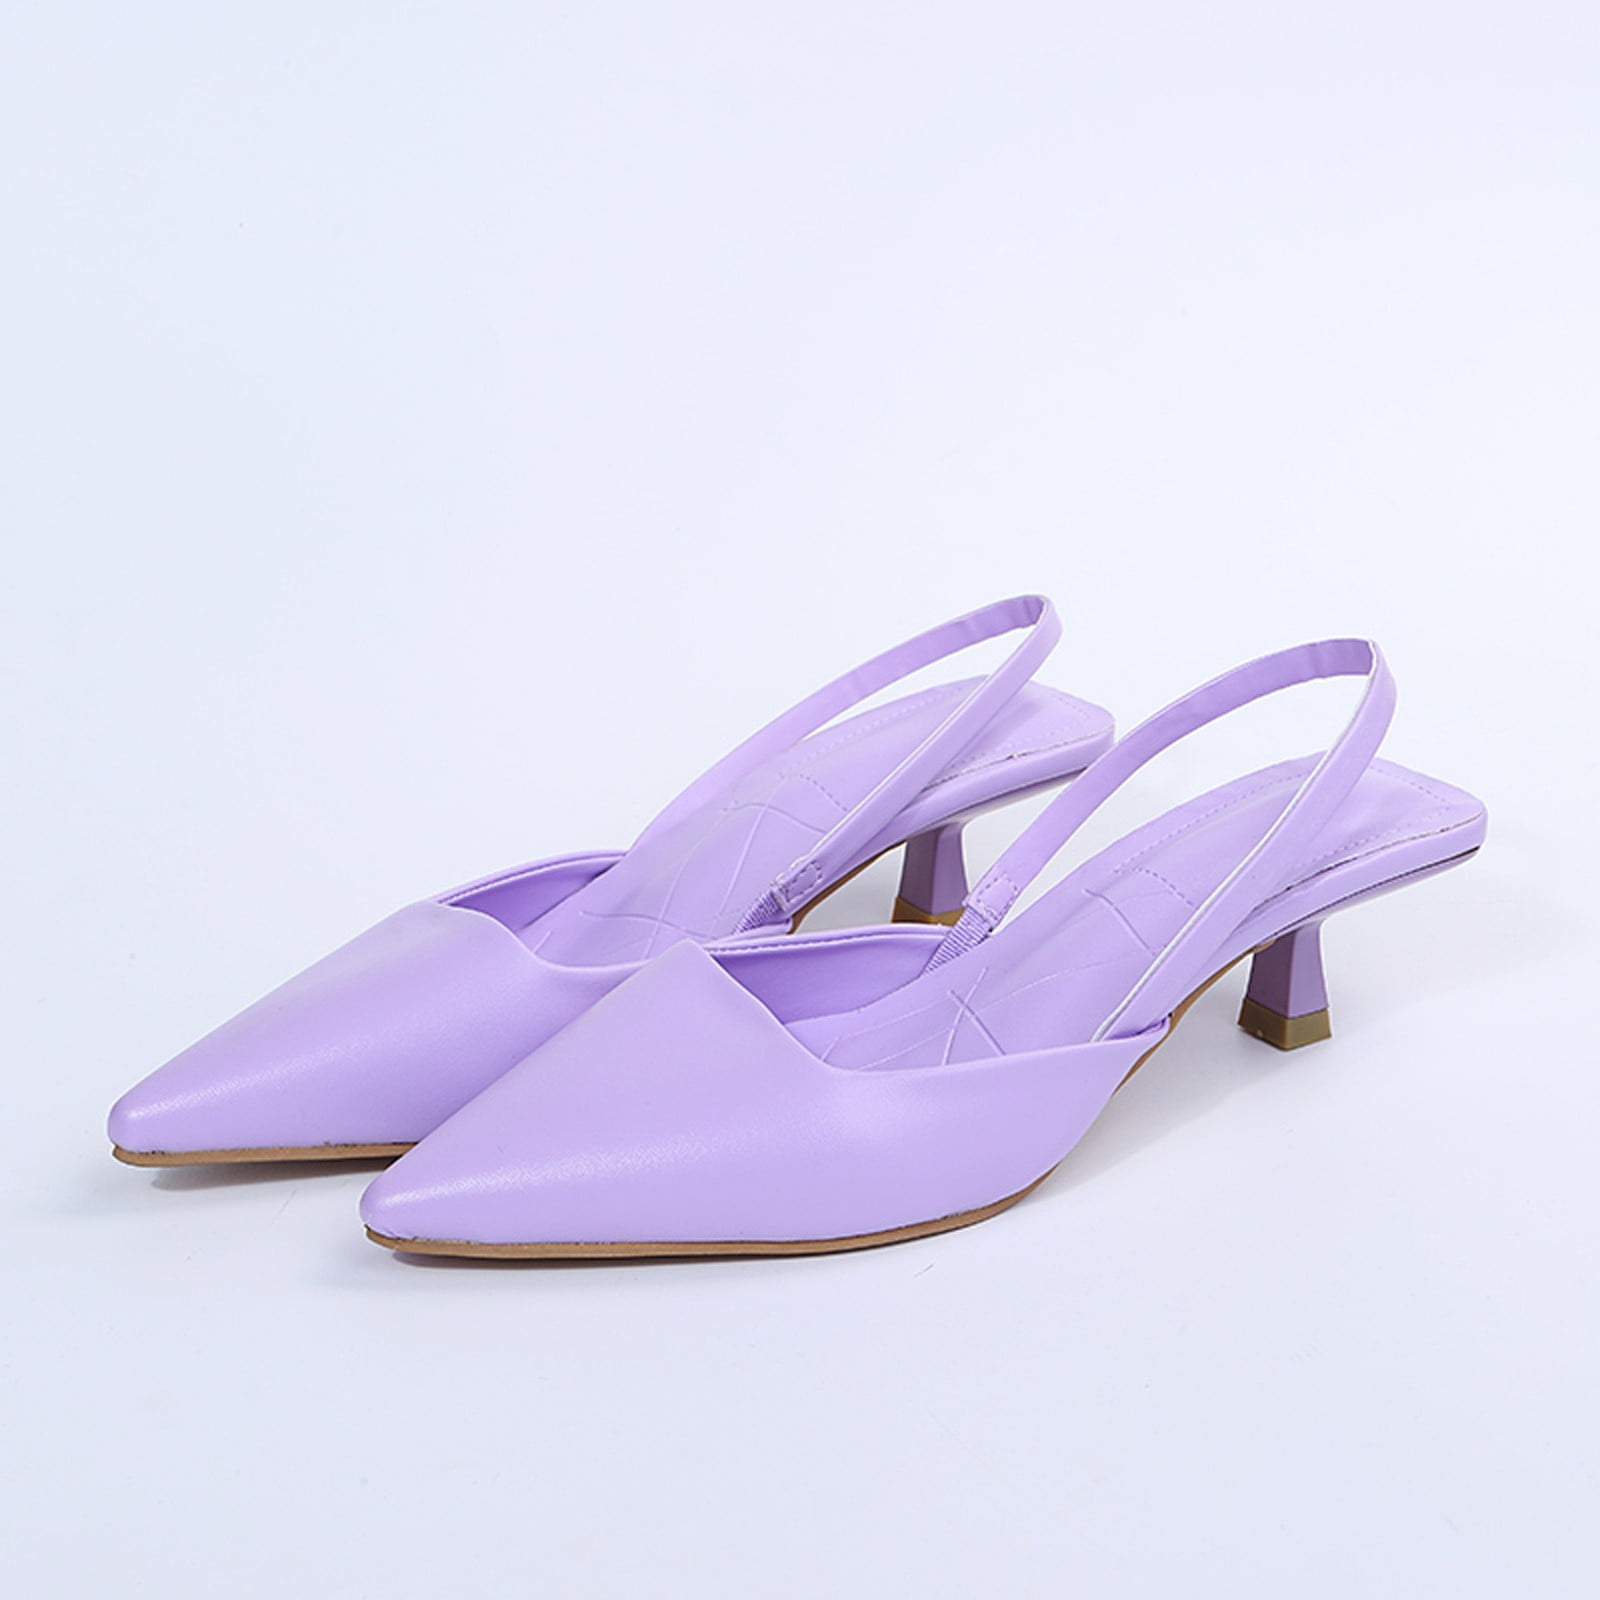 Womens Stiletto High Heels Dress Office Peep Toe Taupe Peach Gold SZ 7  Qupid | eBay